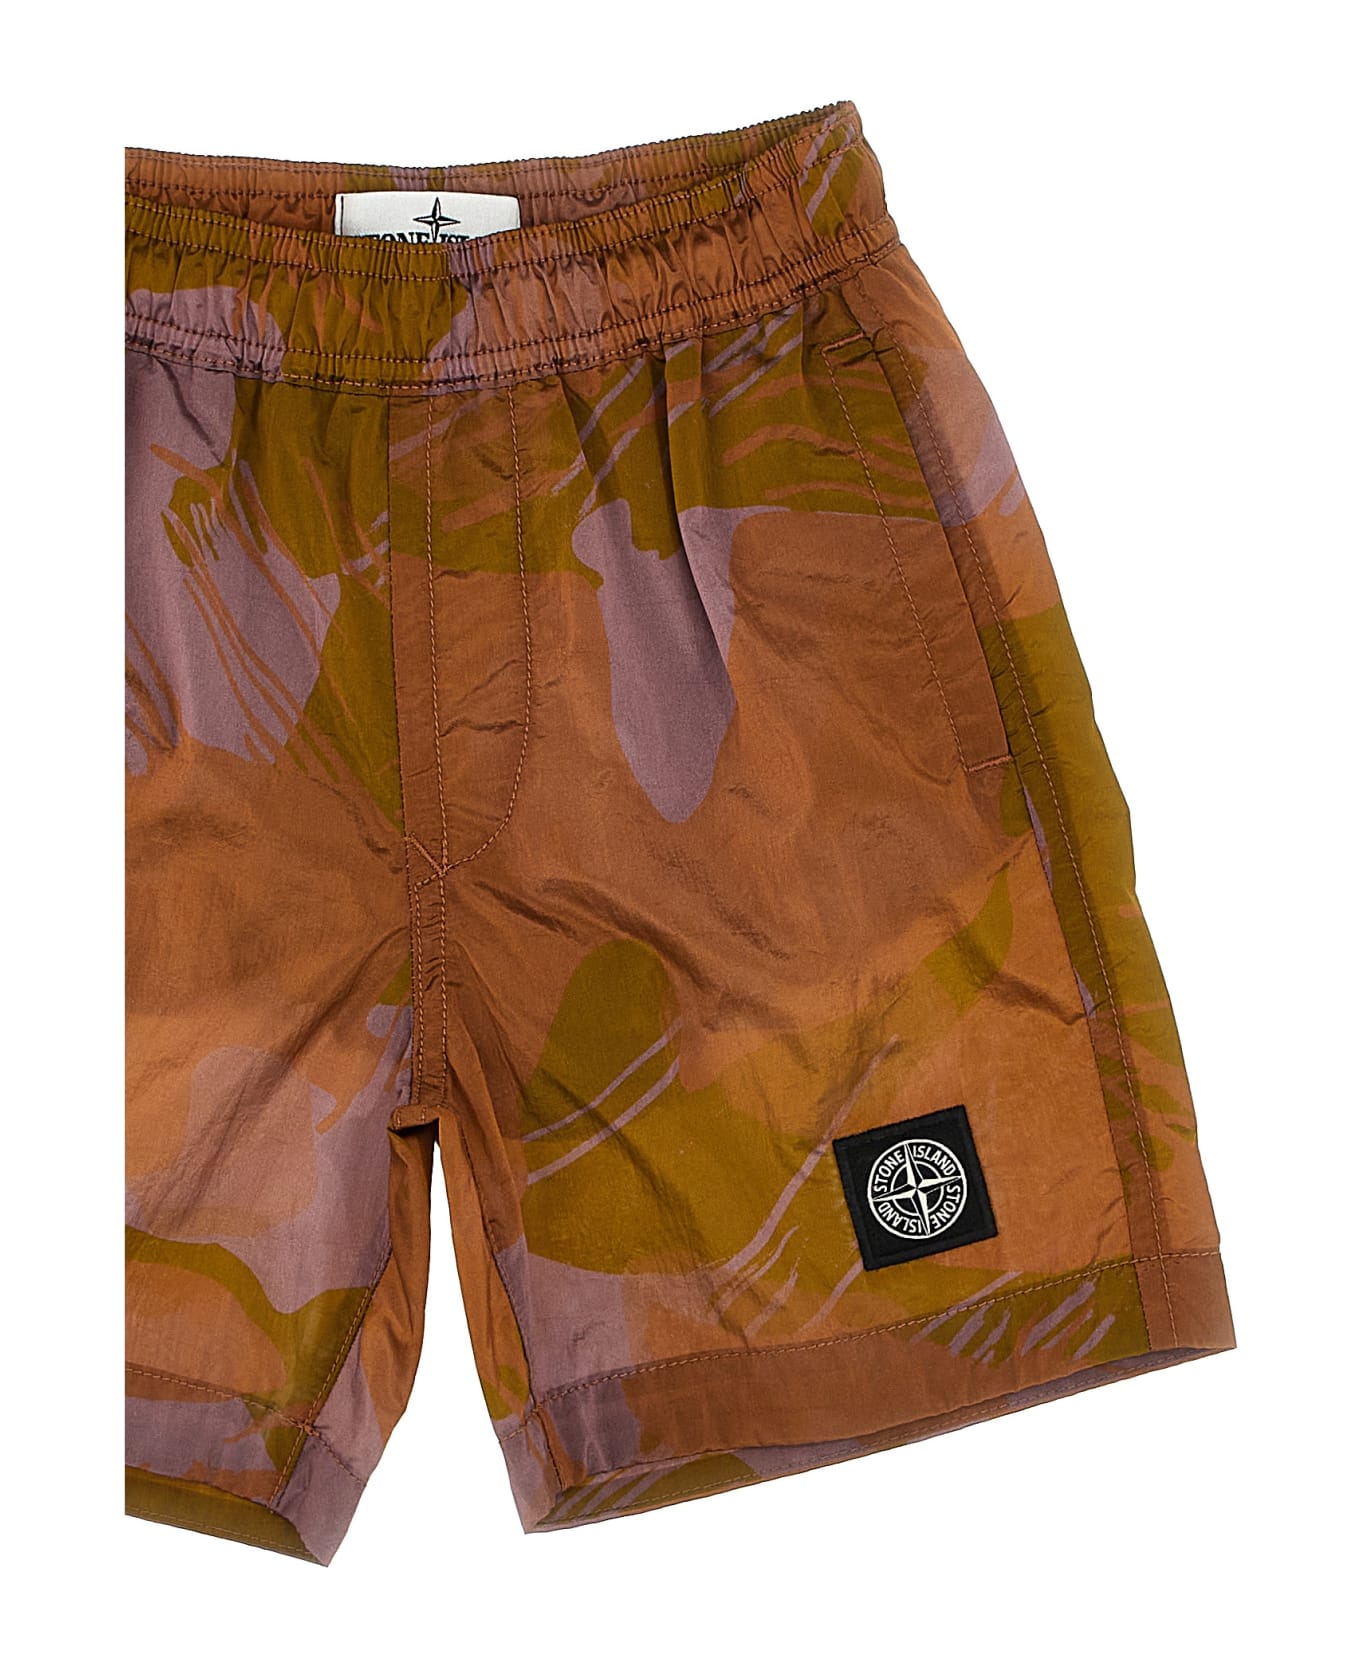 Stone Island Junior Printed Swim Shorts - Multicolor